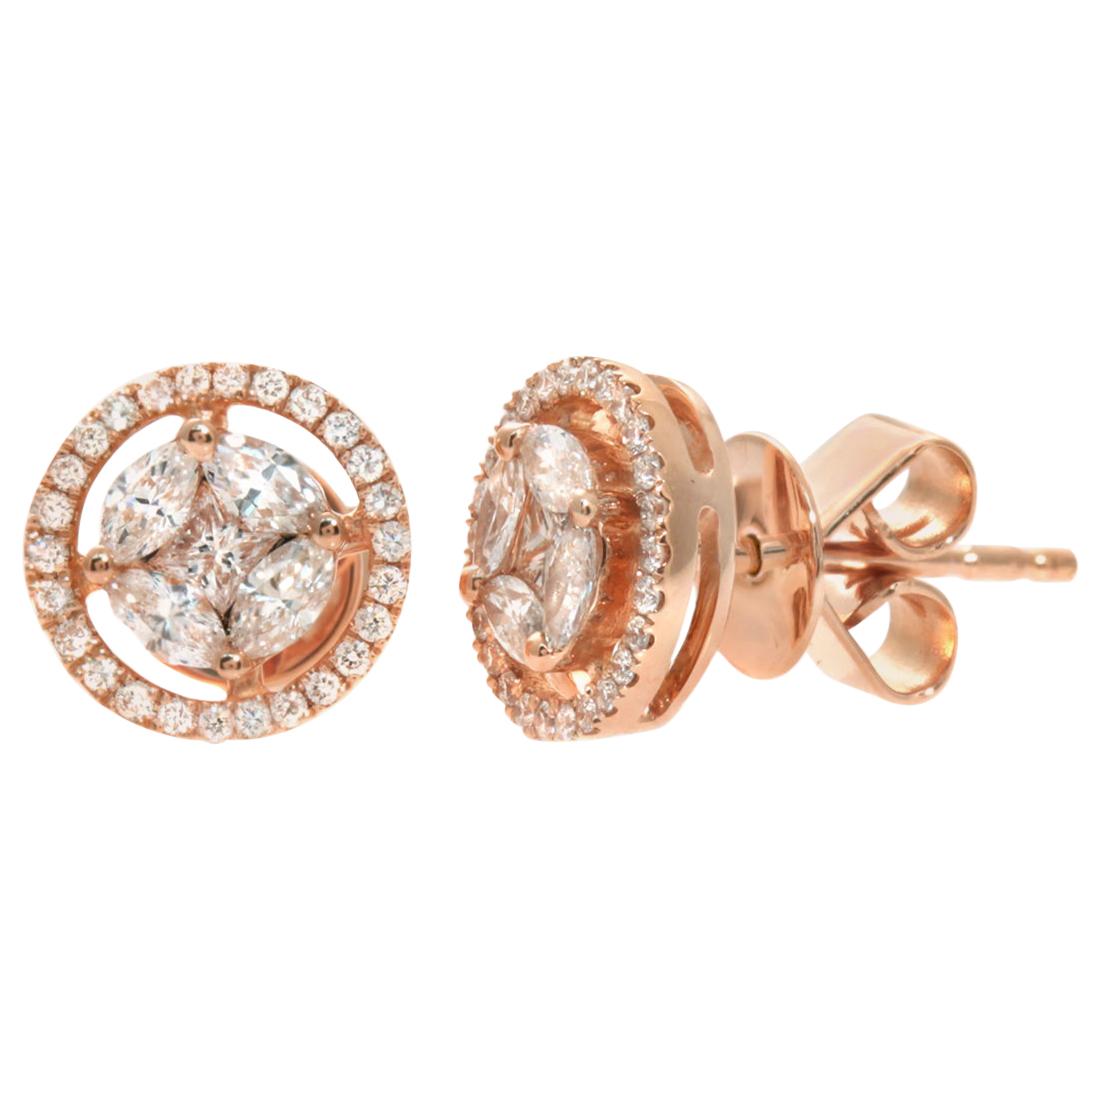 Fine 18 Karat Rose Gold 0.62 Carat Natural Diamonds Stud Earrings